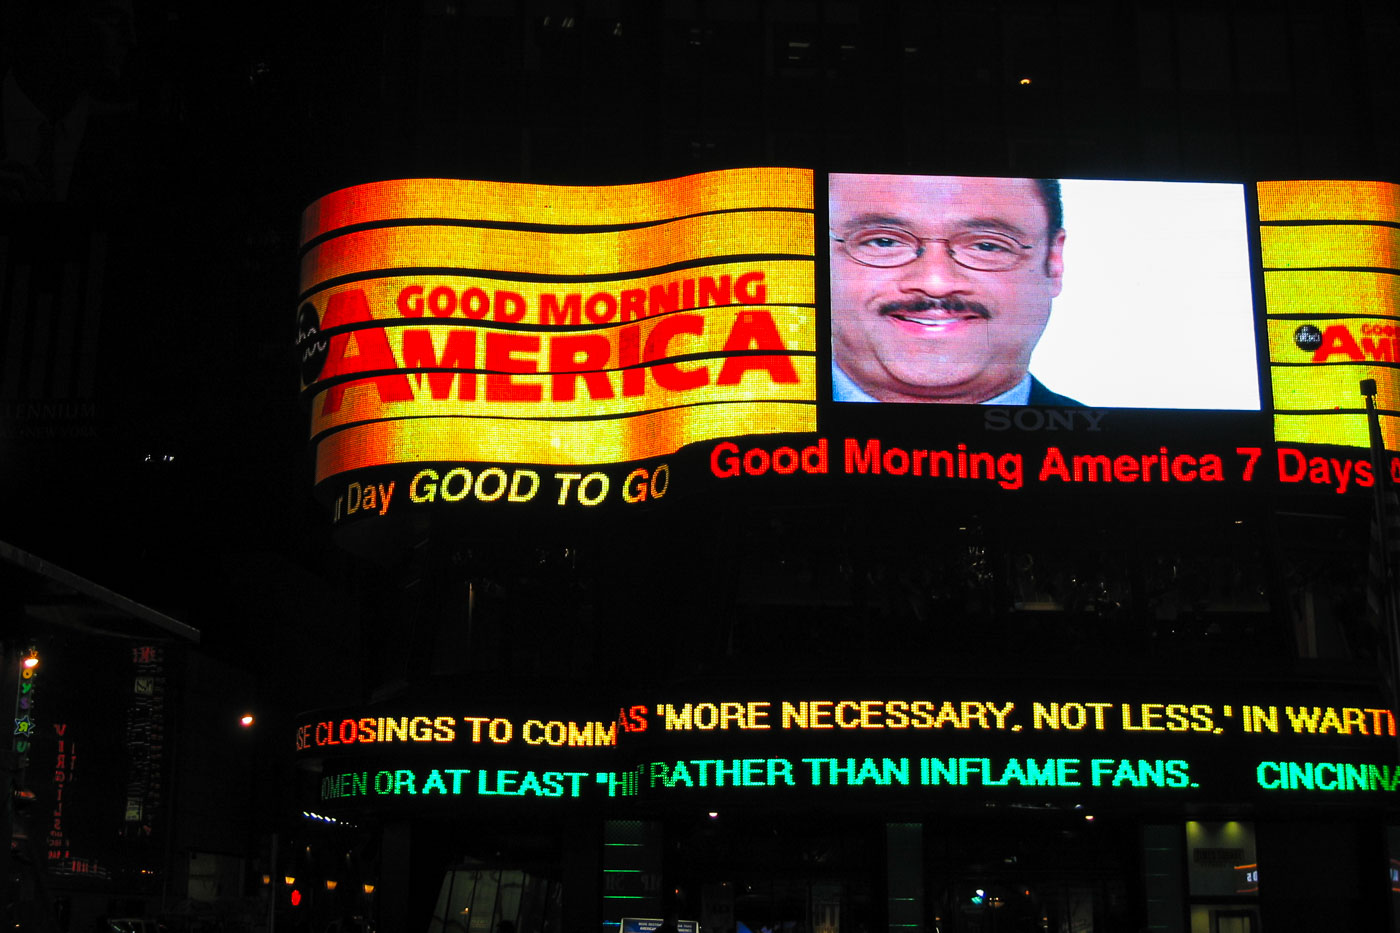 A Good Morning America Billboard at night